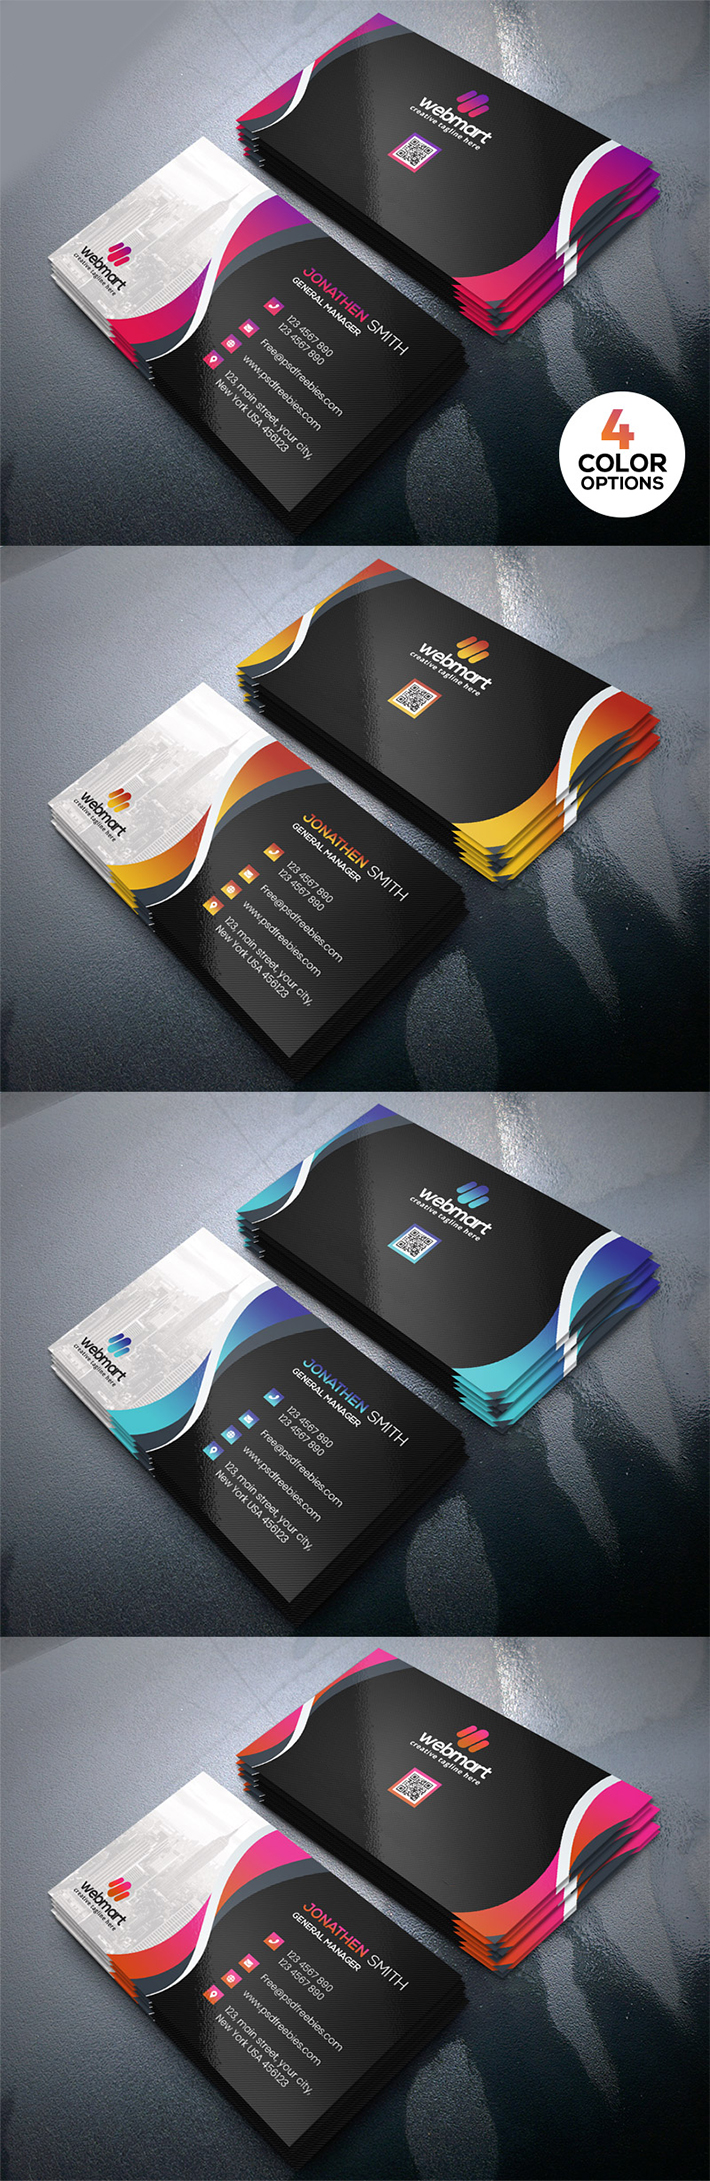 Free Download Elegant Business Card PSD Template Design (4 Color Options)